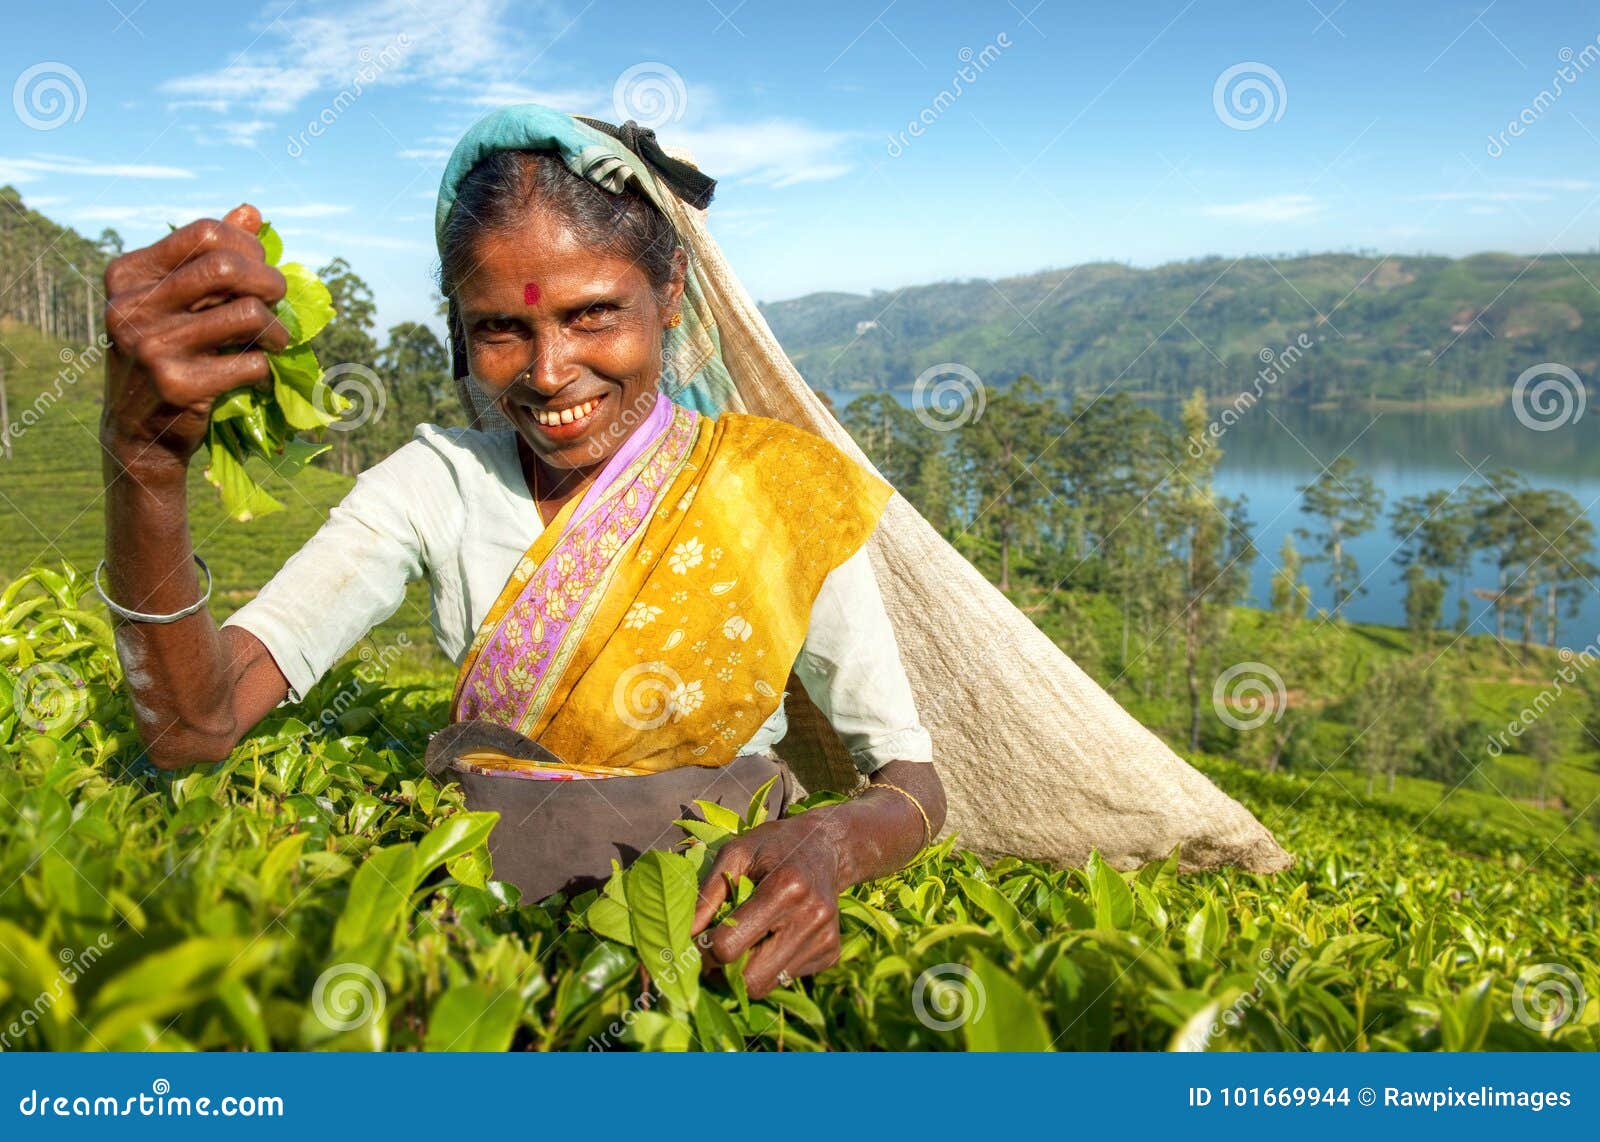 tea picker at a plantation in sri lanka